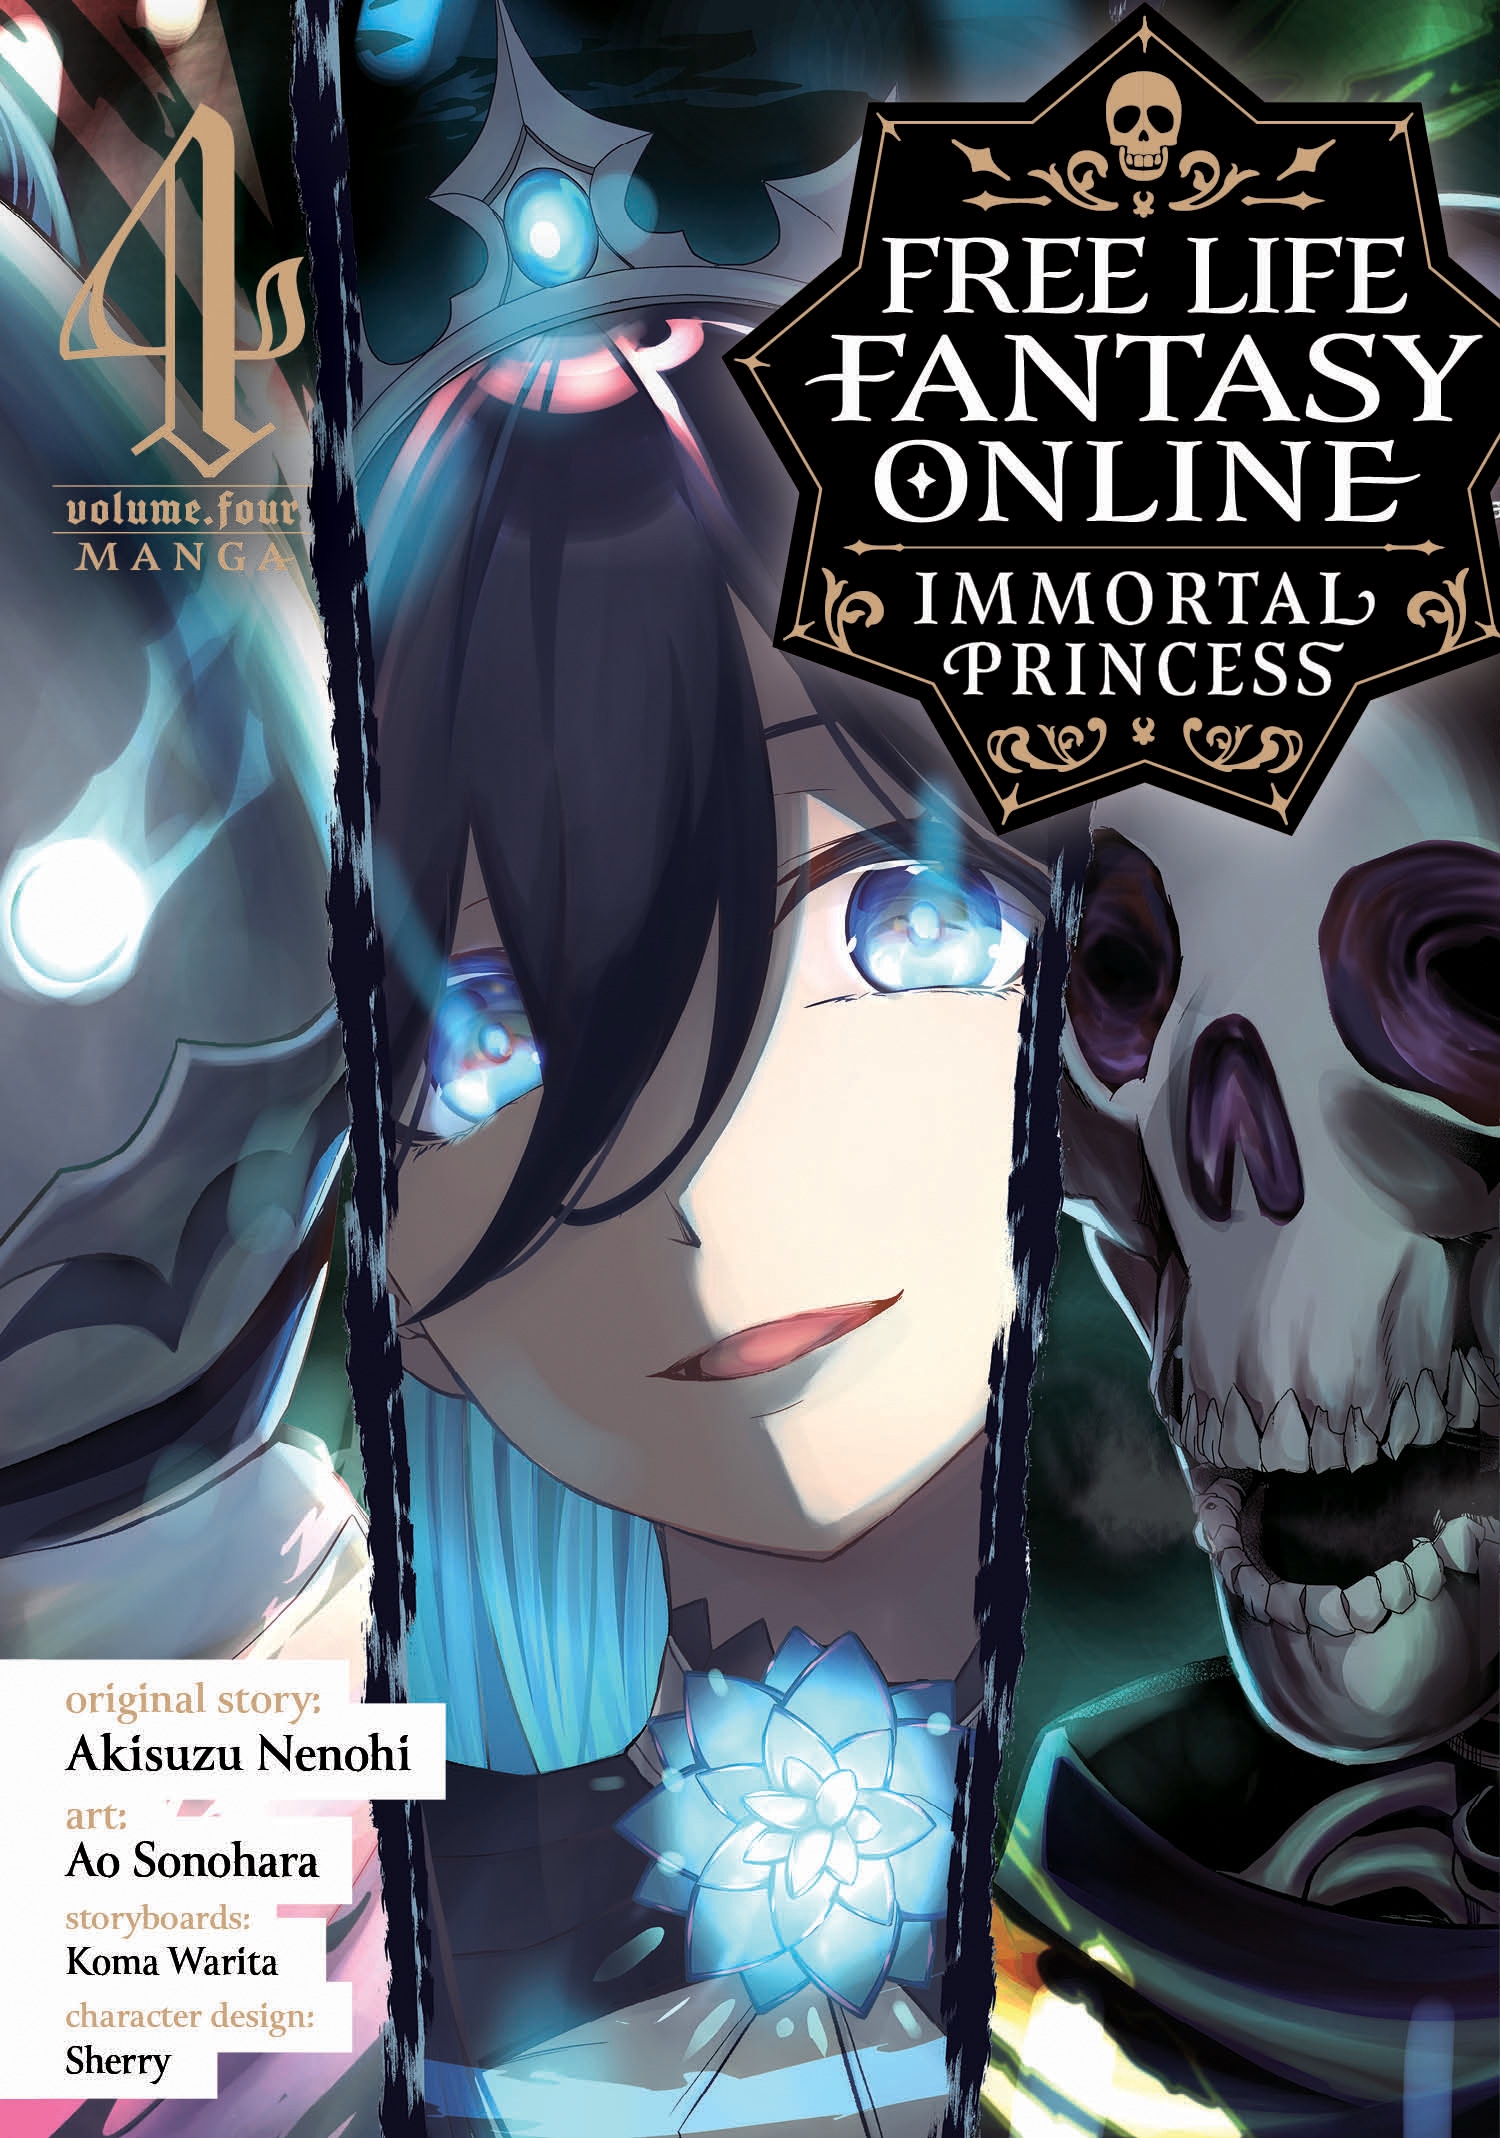 Free Life Fantasy Online Immortal Princess (Manga) Vol. 4 by Akisuzu Nenohi  - Penguin Books New Zealand